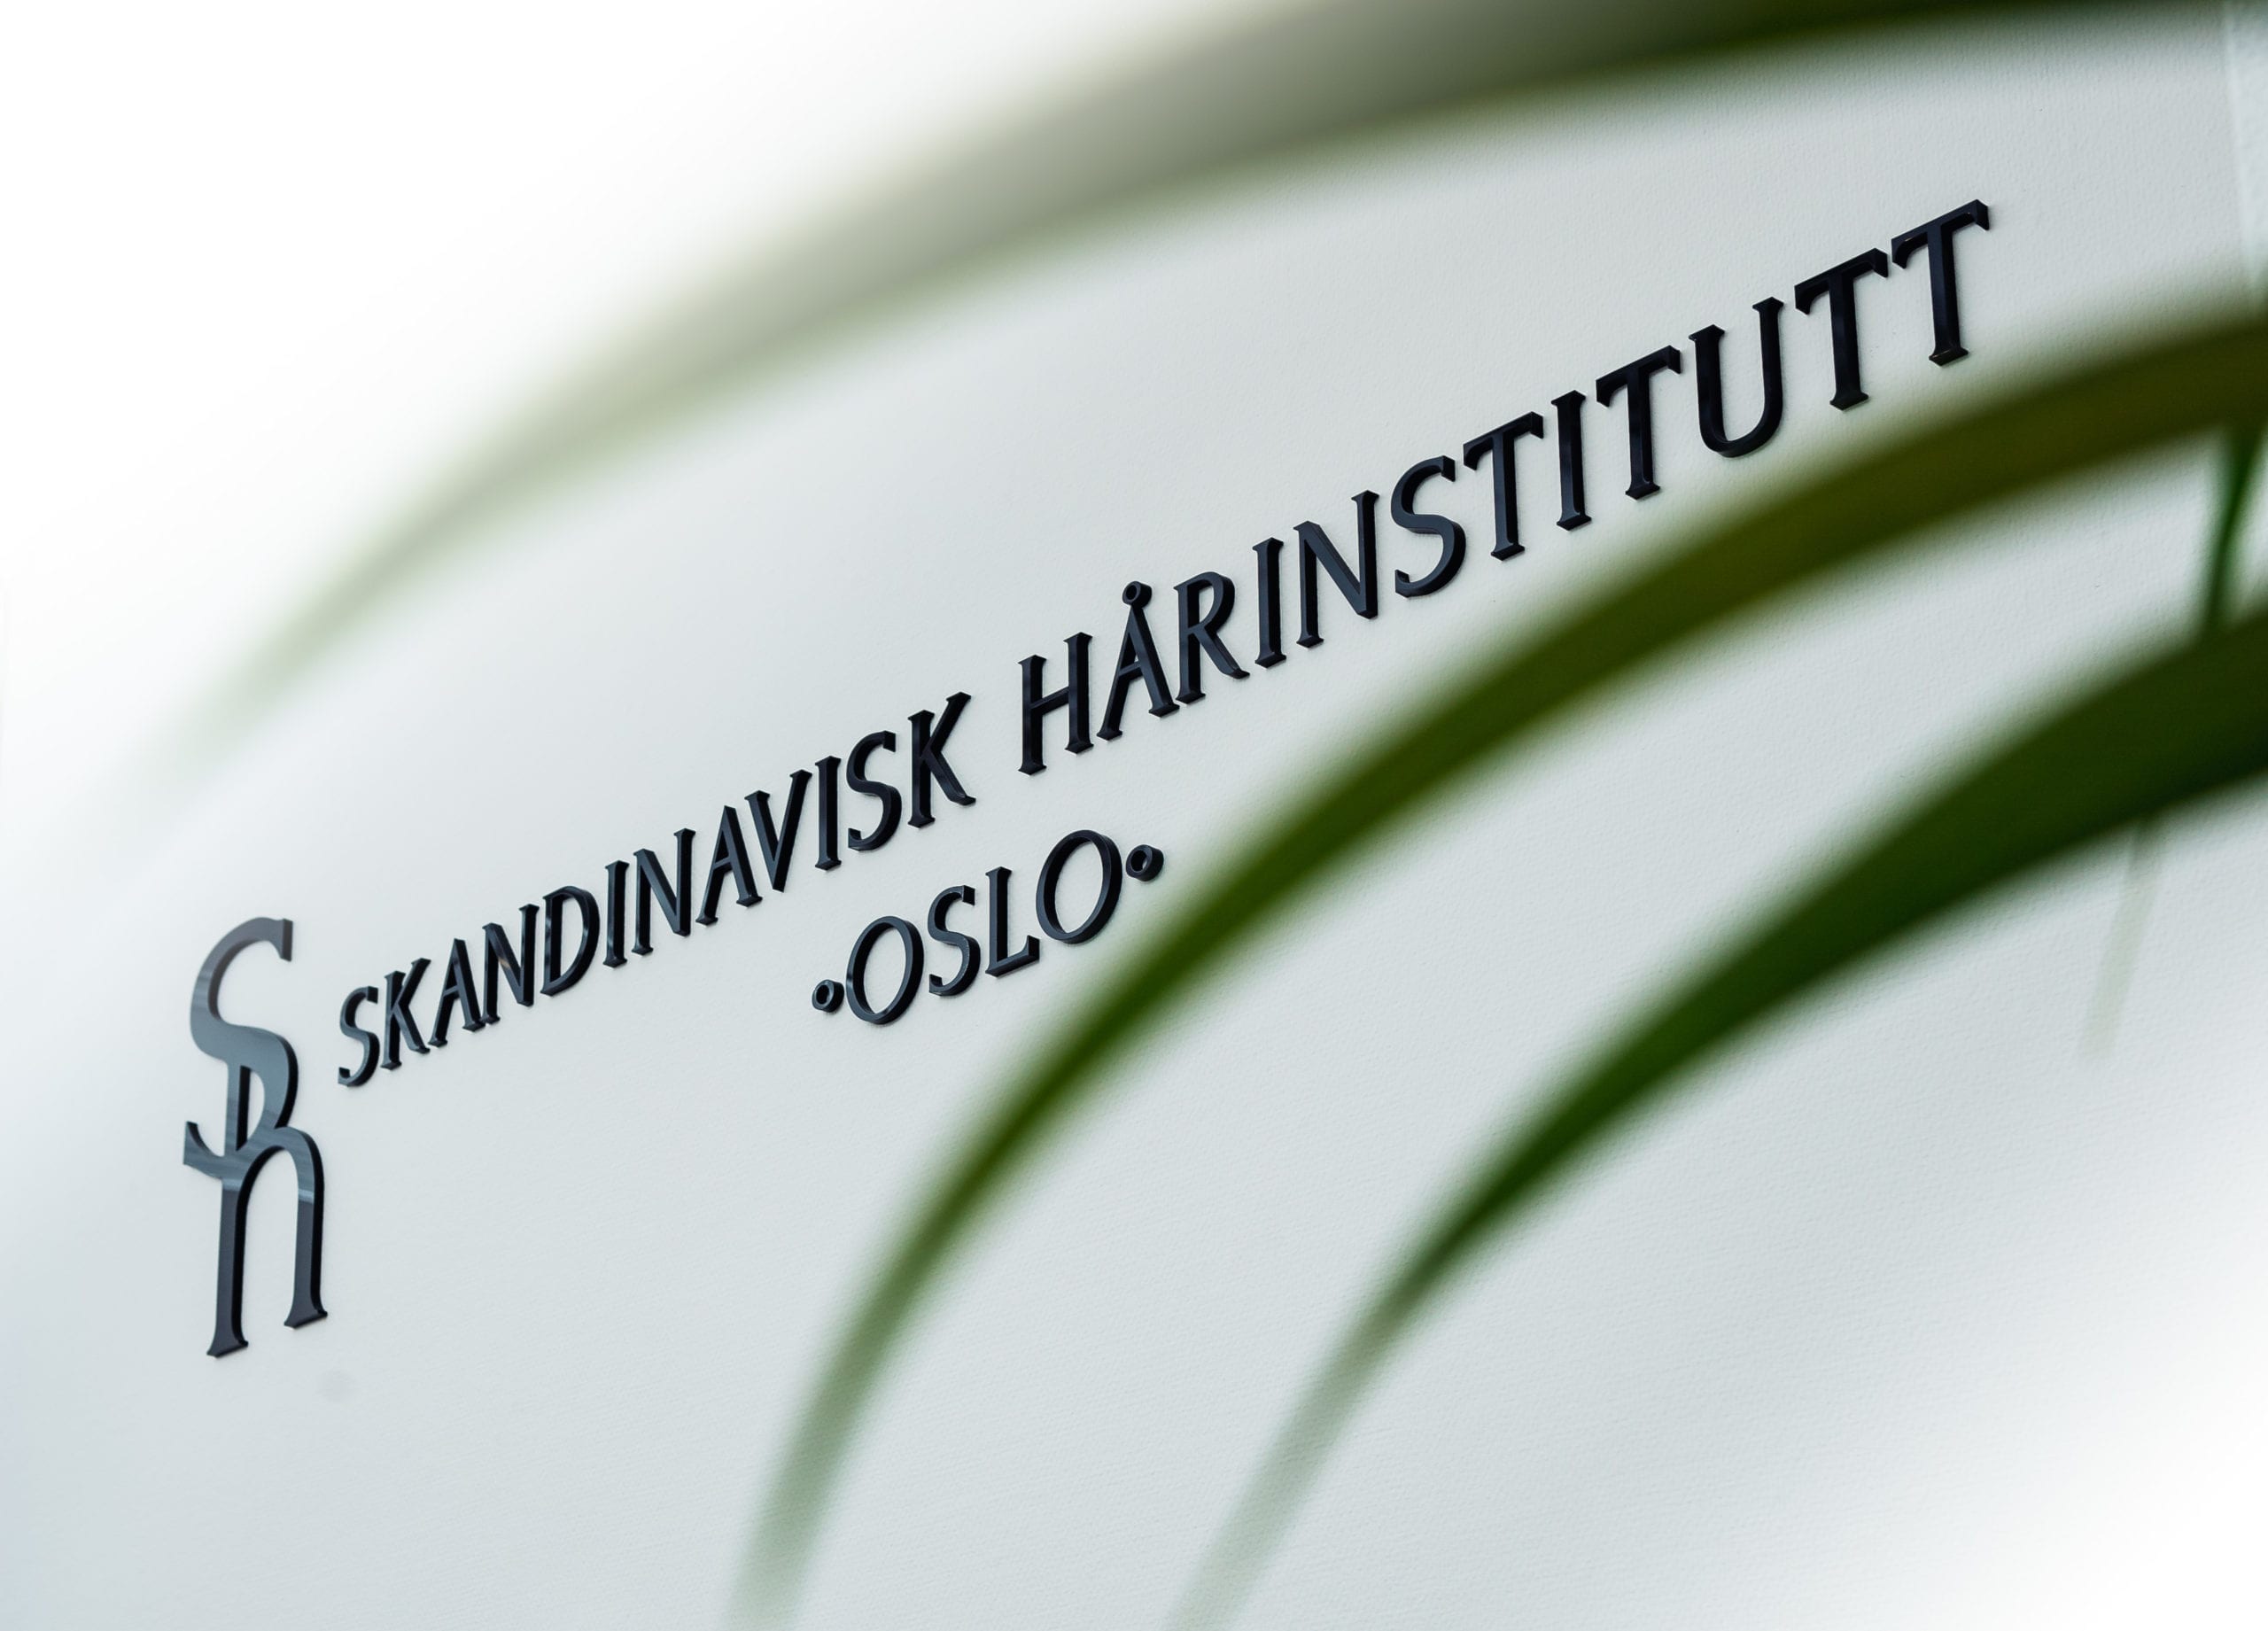 Skandinavisk Hårinstitutt. 